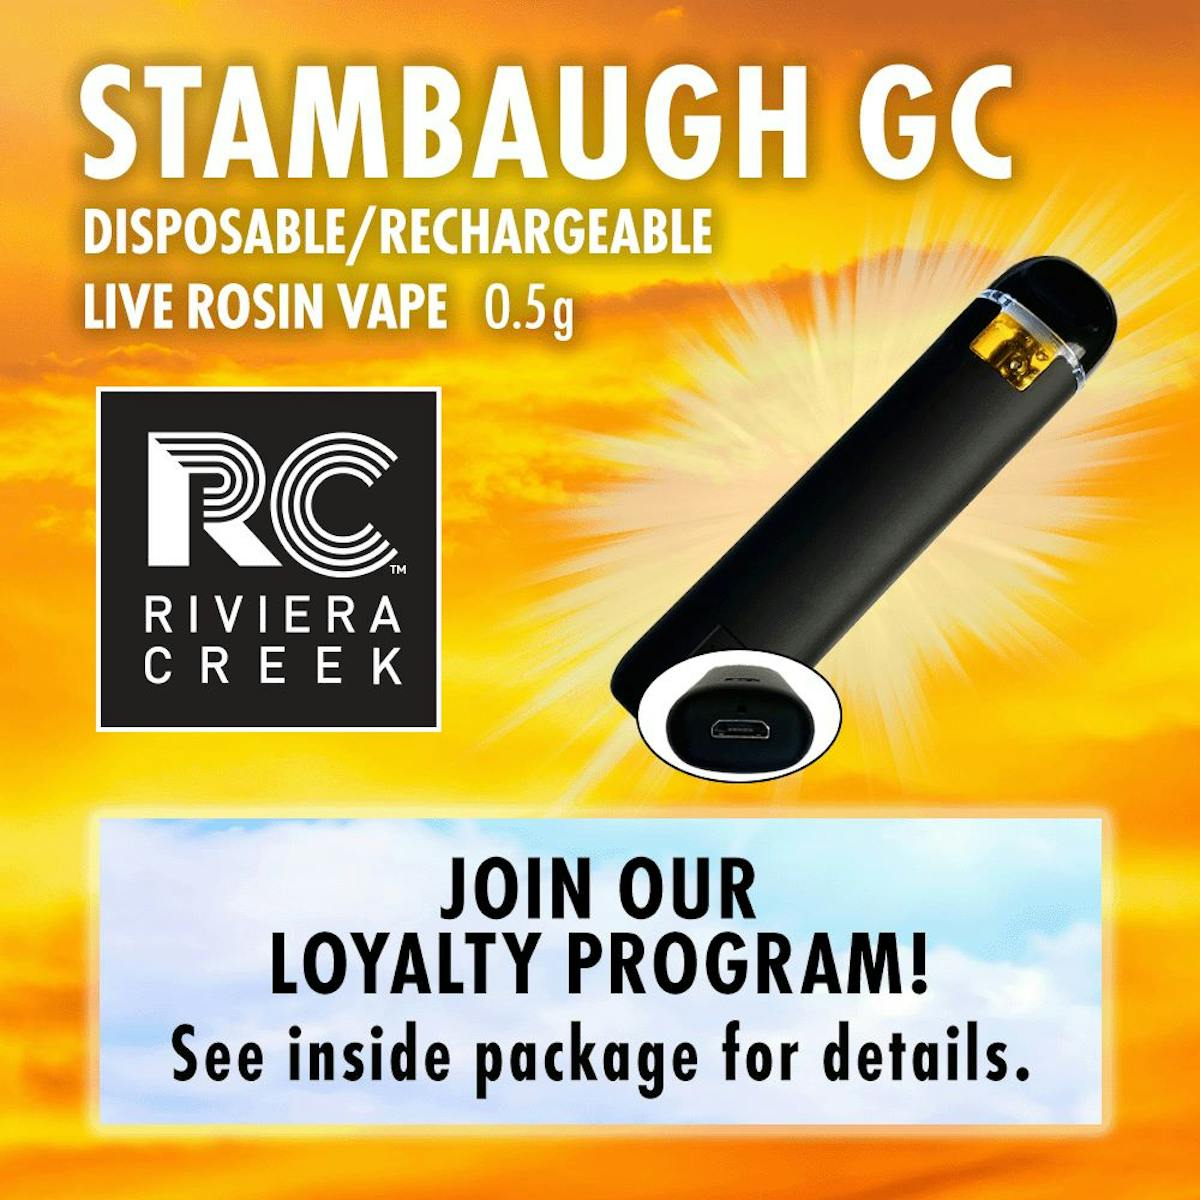 image of Stambaugh GC Live Rosin Disposable